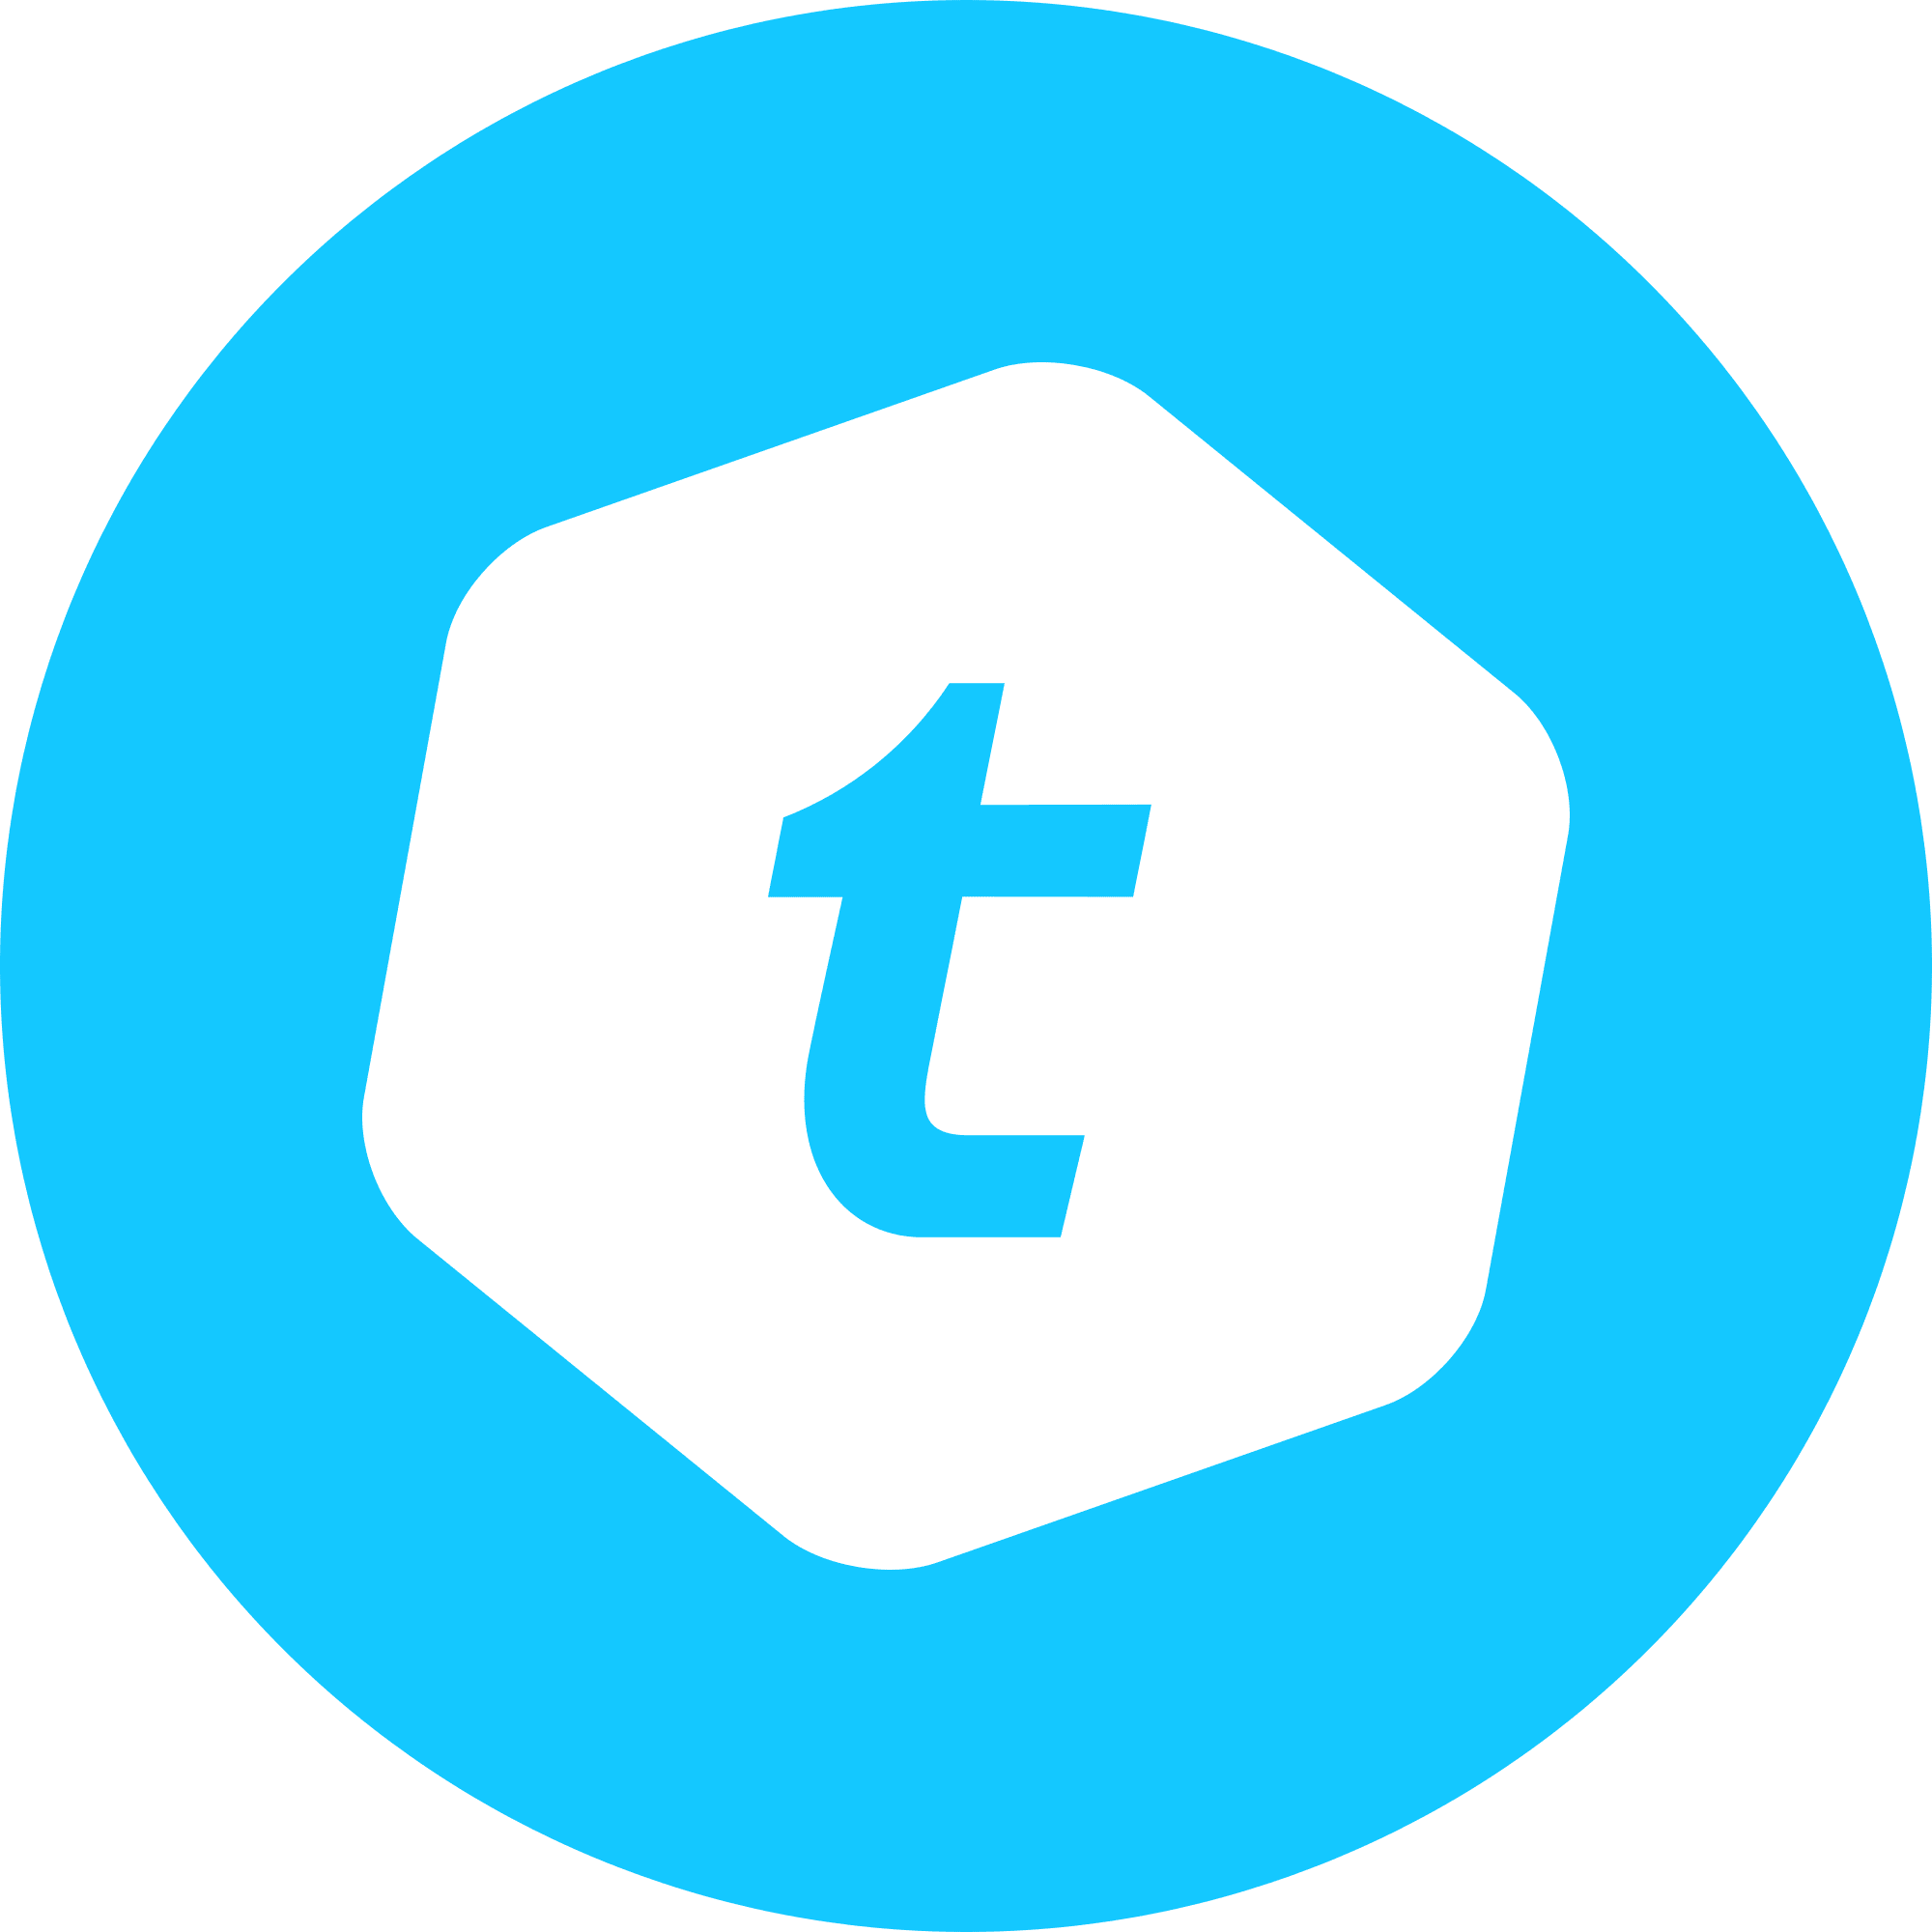 Telcoin logo in png format